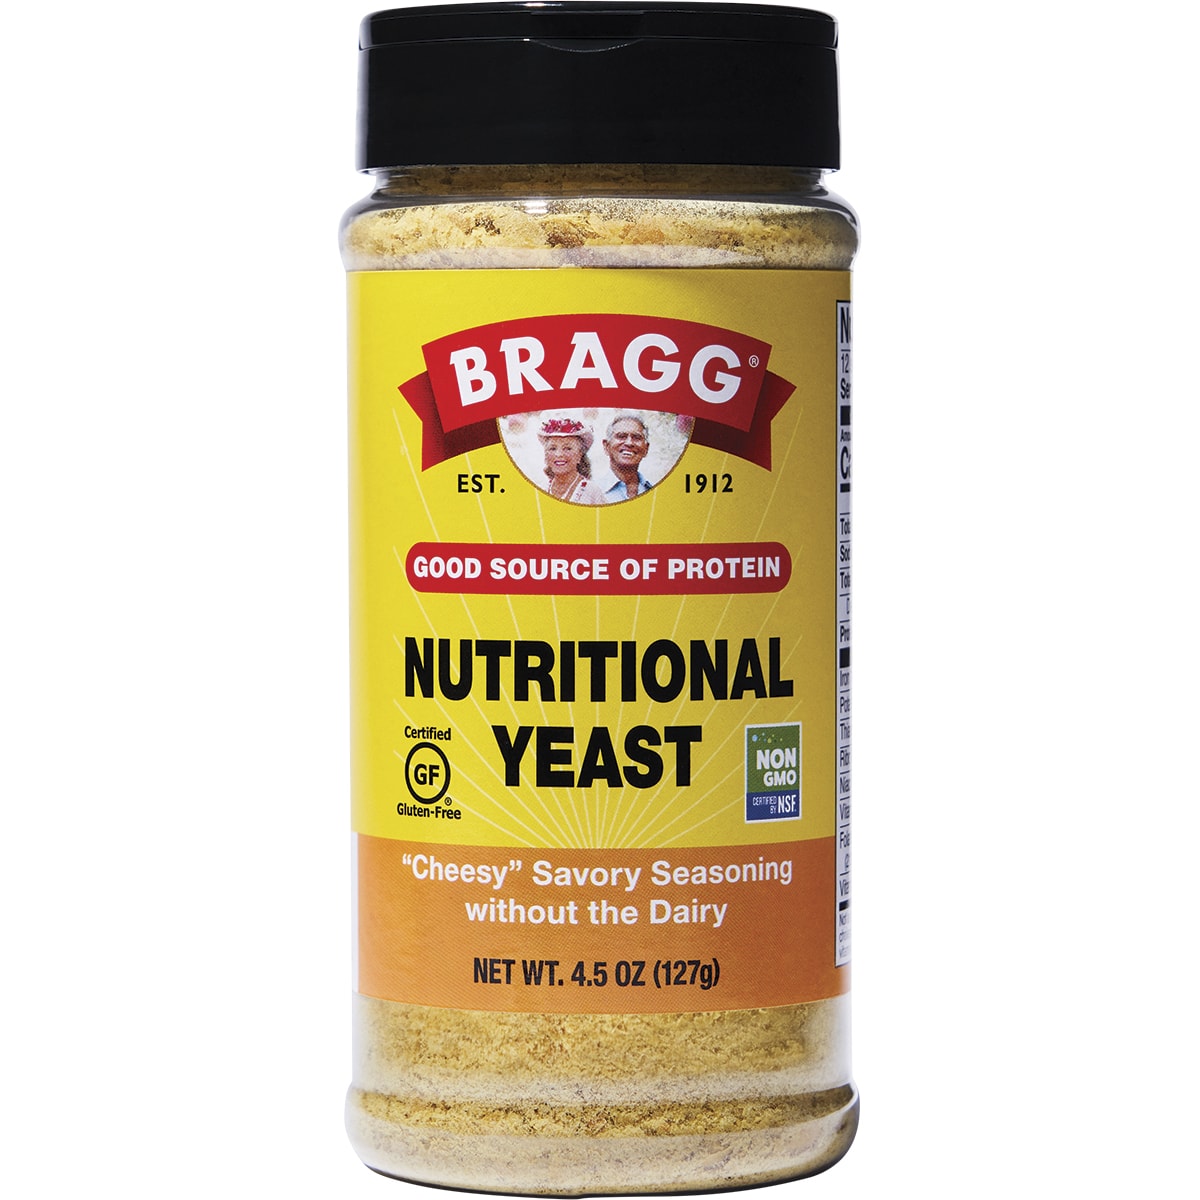 BRAGG NUTRITIONAL YEAST